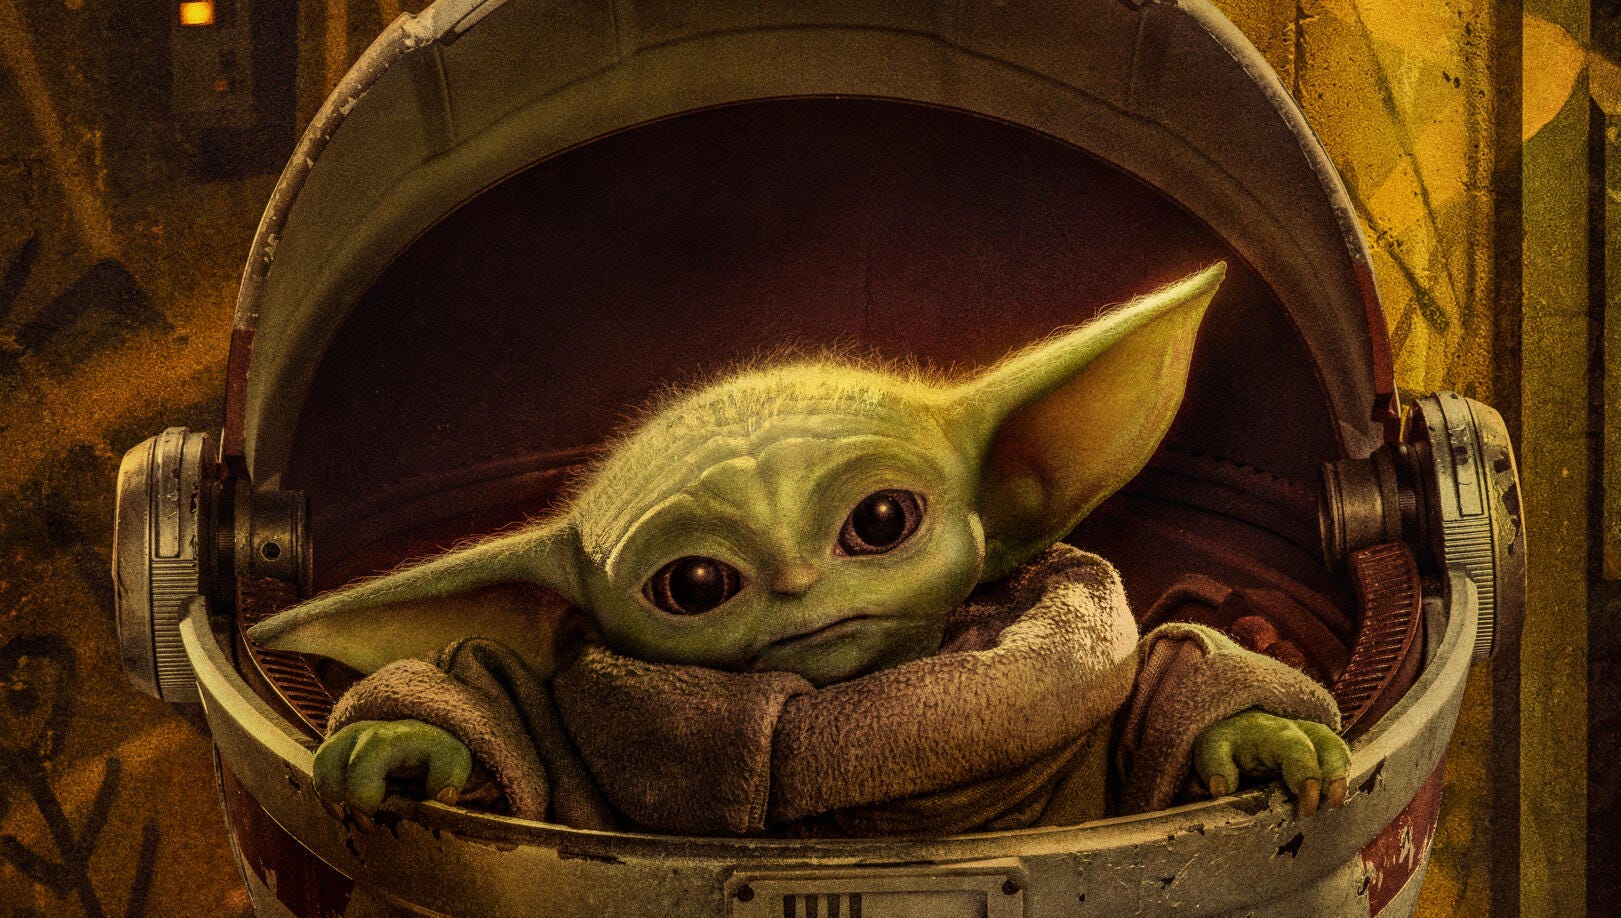 The Mandalorian season 2 trailer delivers action, Baby Yoda cuteness - CNET